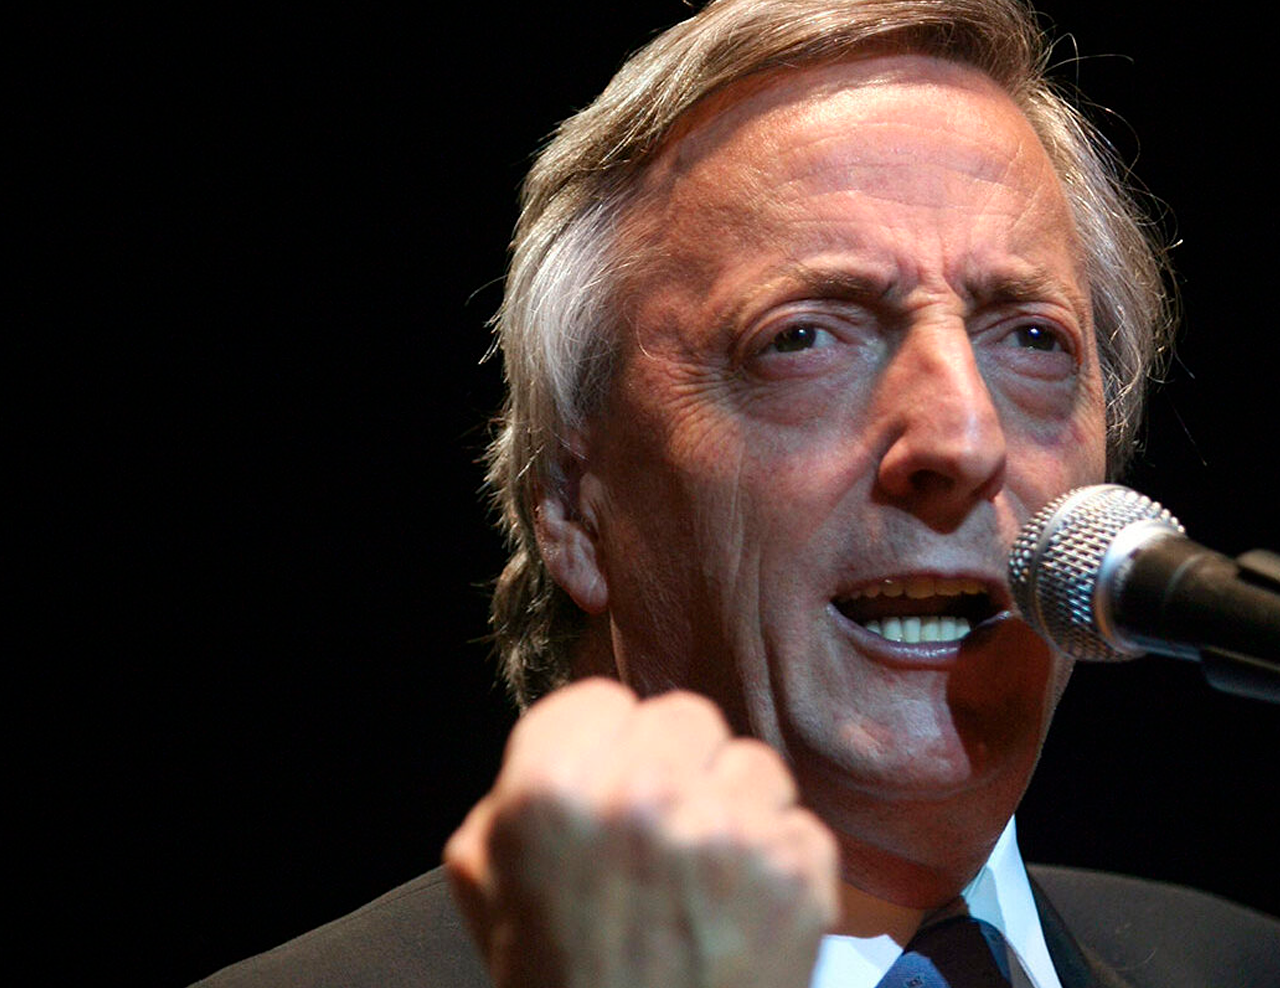 25 DE MAYO de 2003. Néstor Kirchner asume la Presidencia